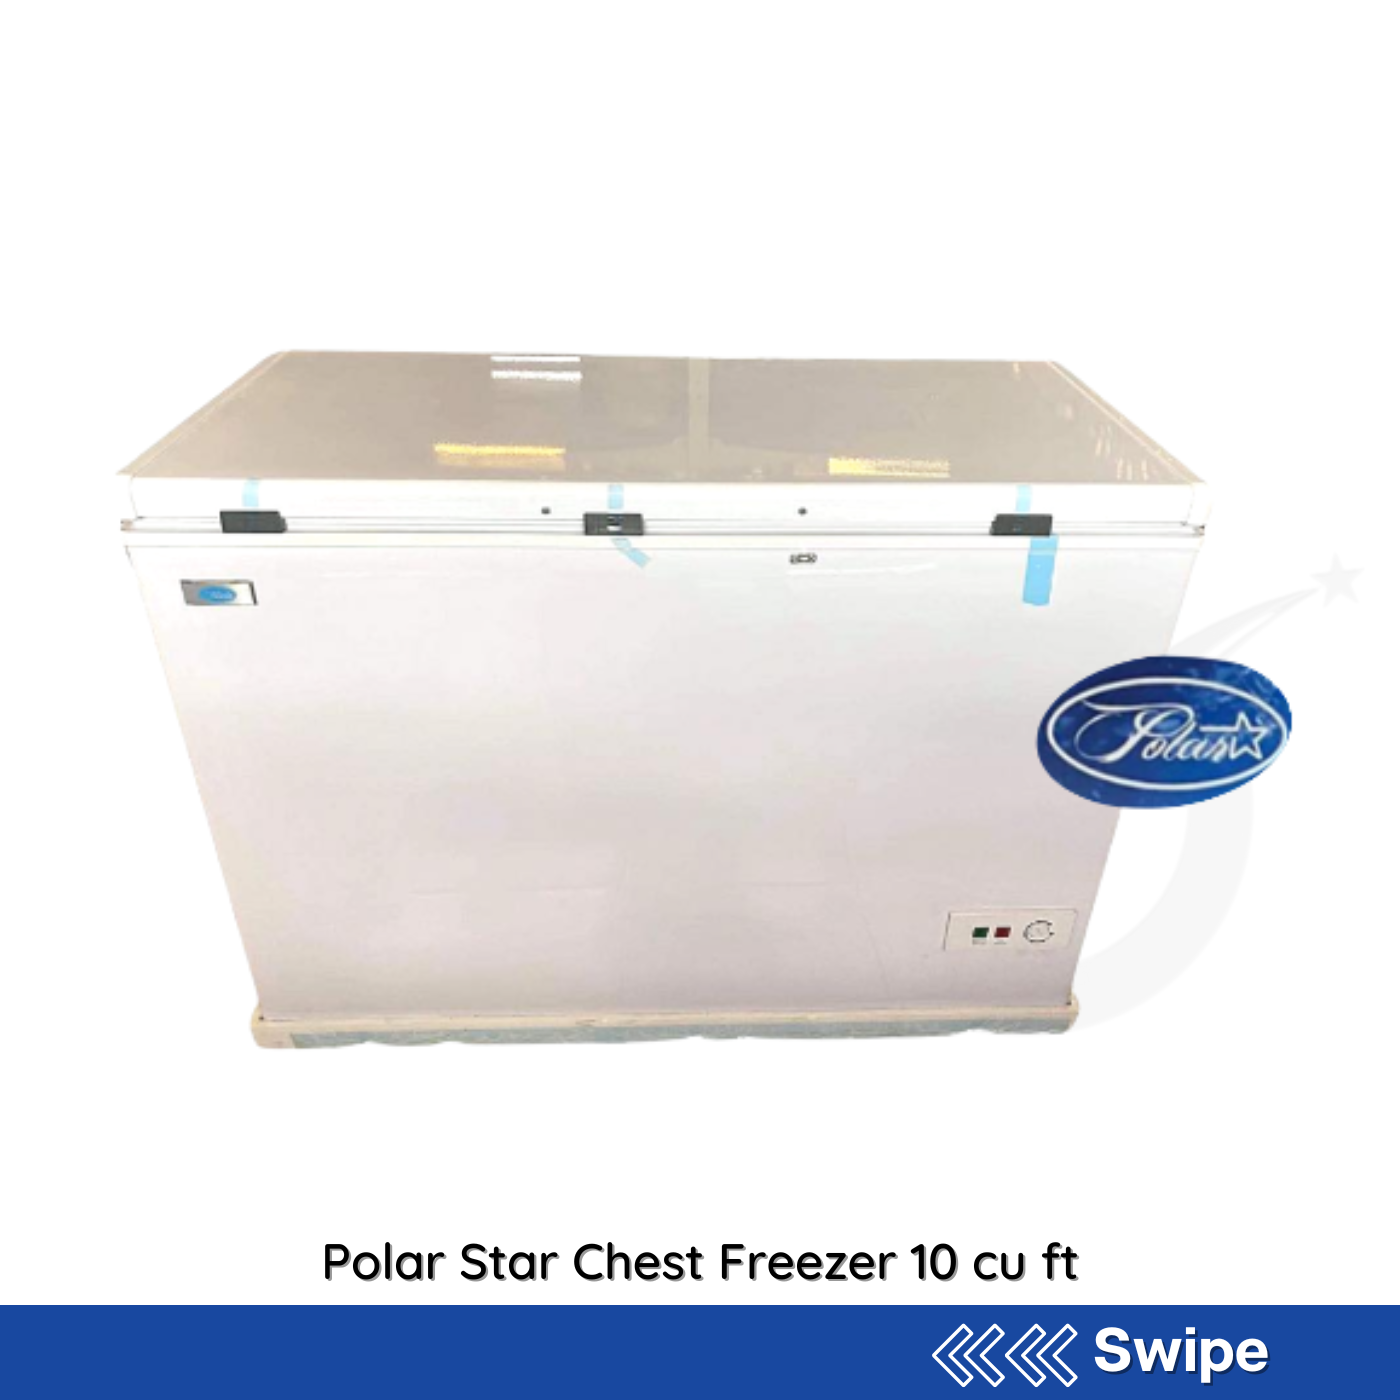 Polar Star Chest Freezer 10 cu ft – People's Choice Marketing